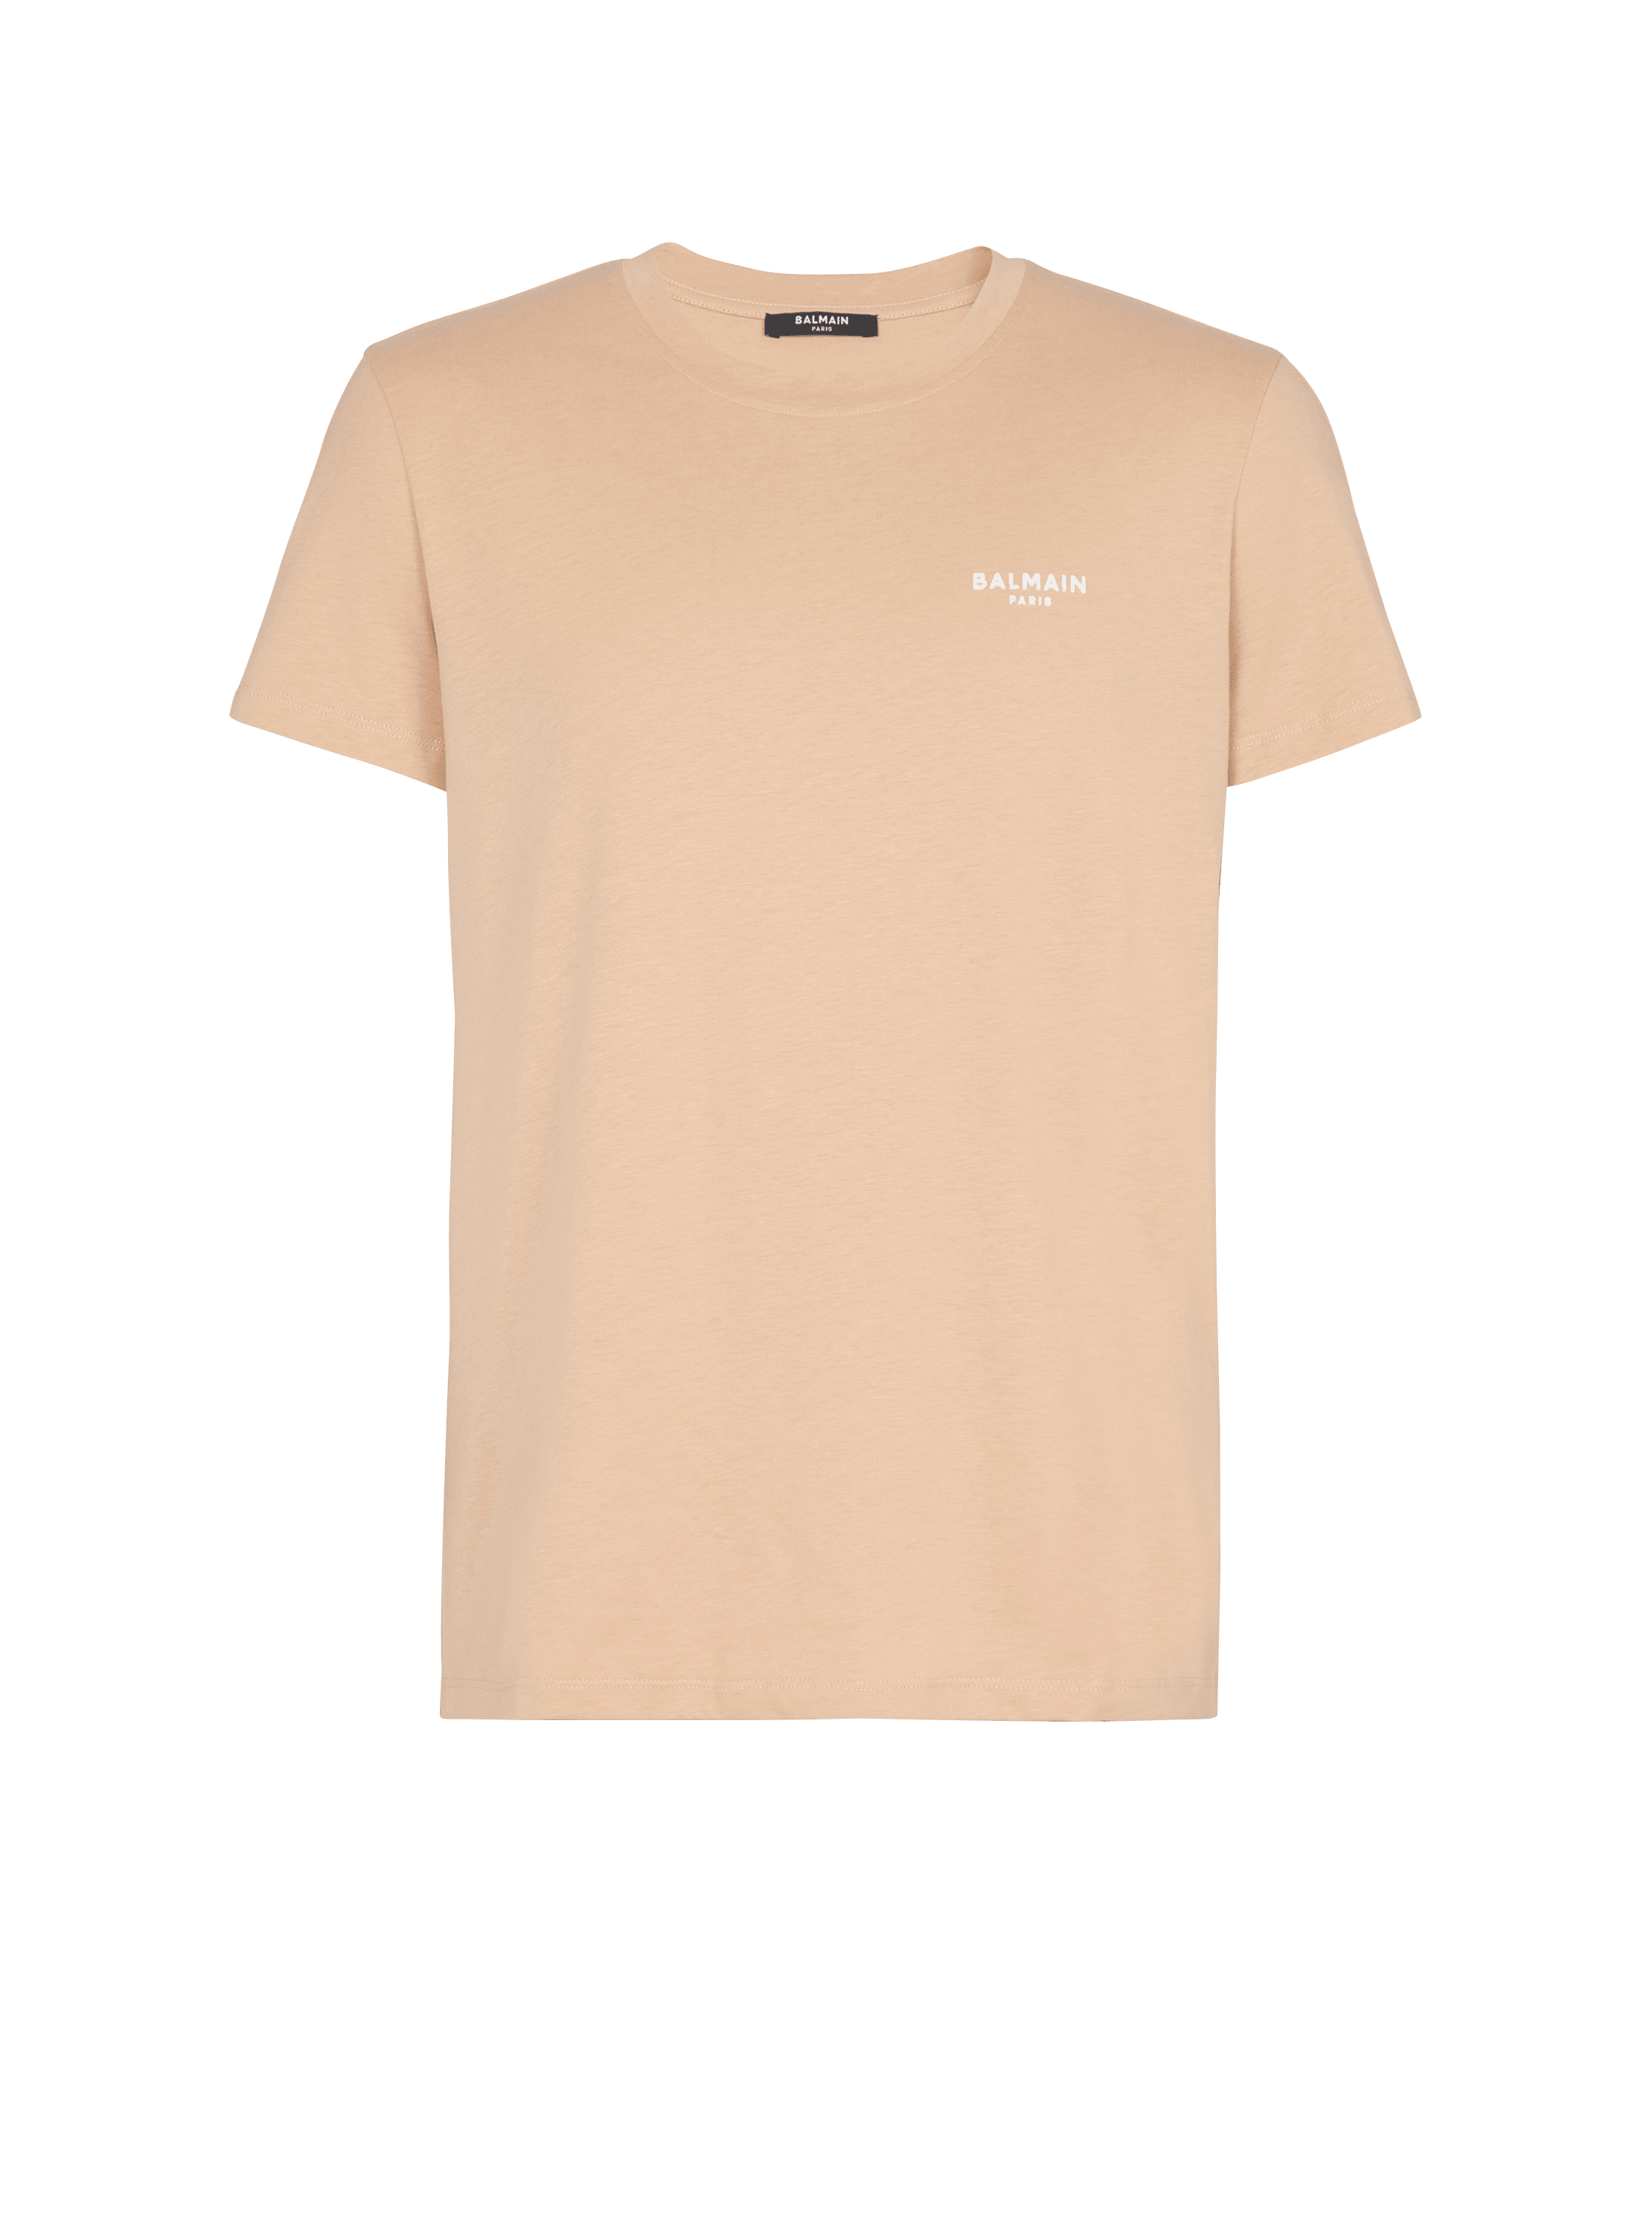 Beflocktes Balmain T-Shirt, beige, hi-res